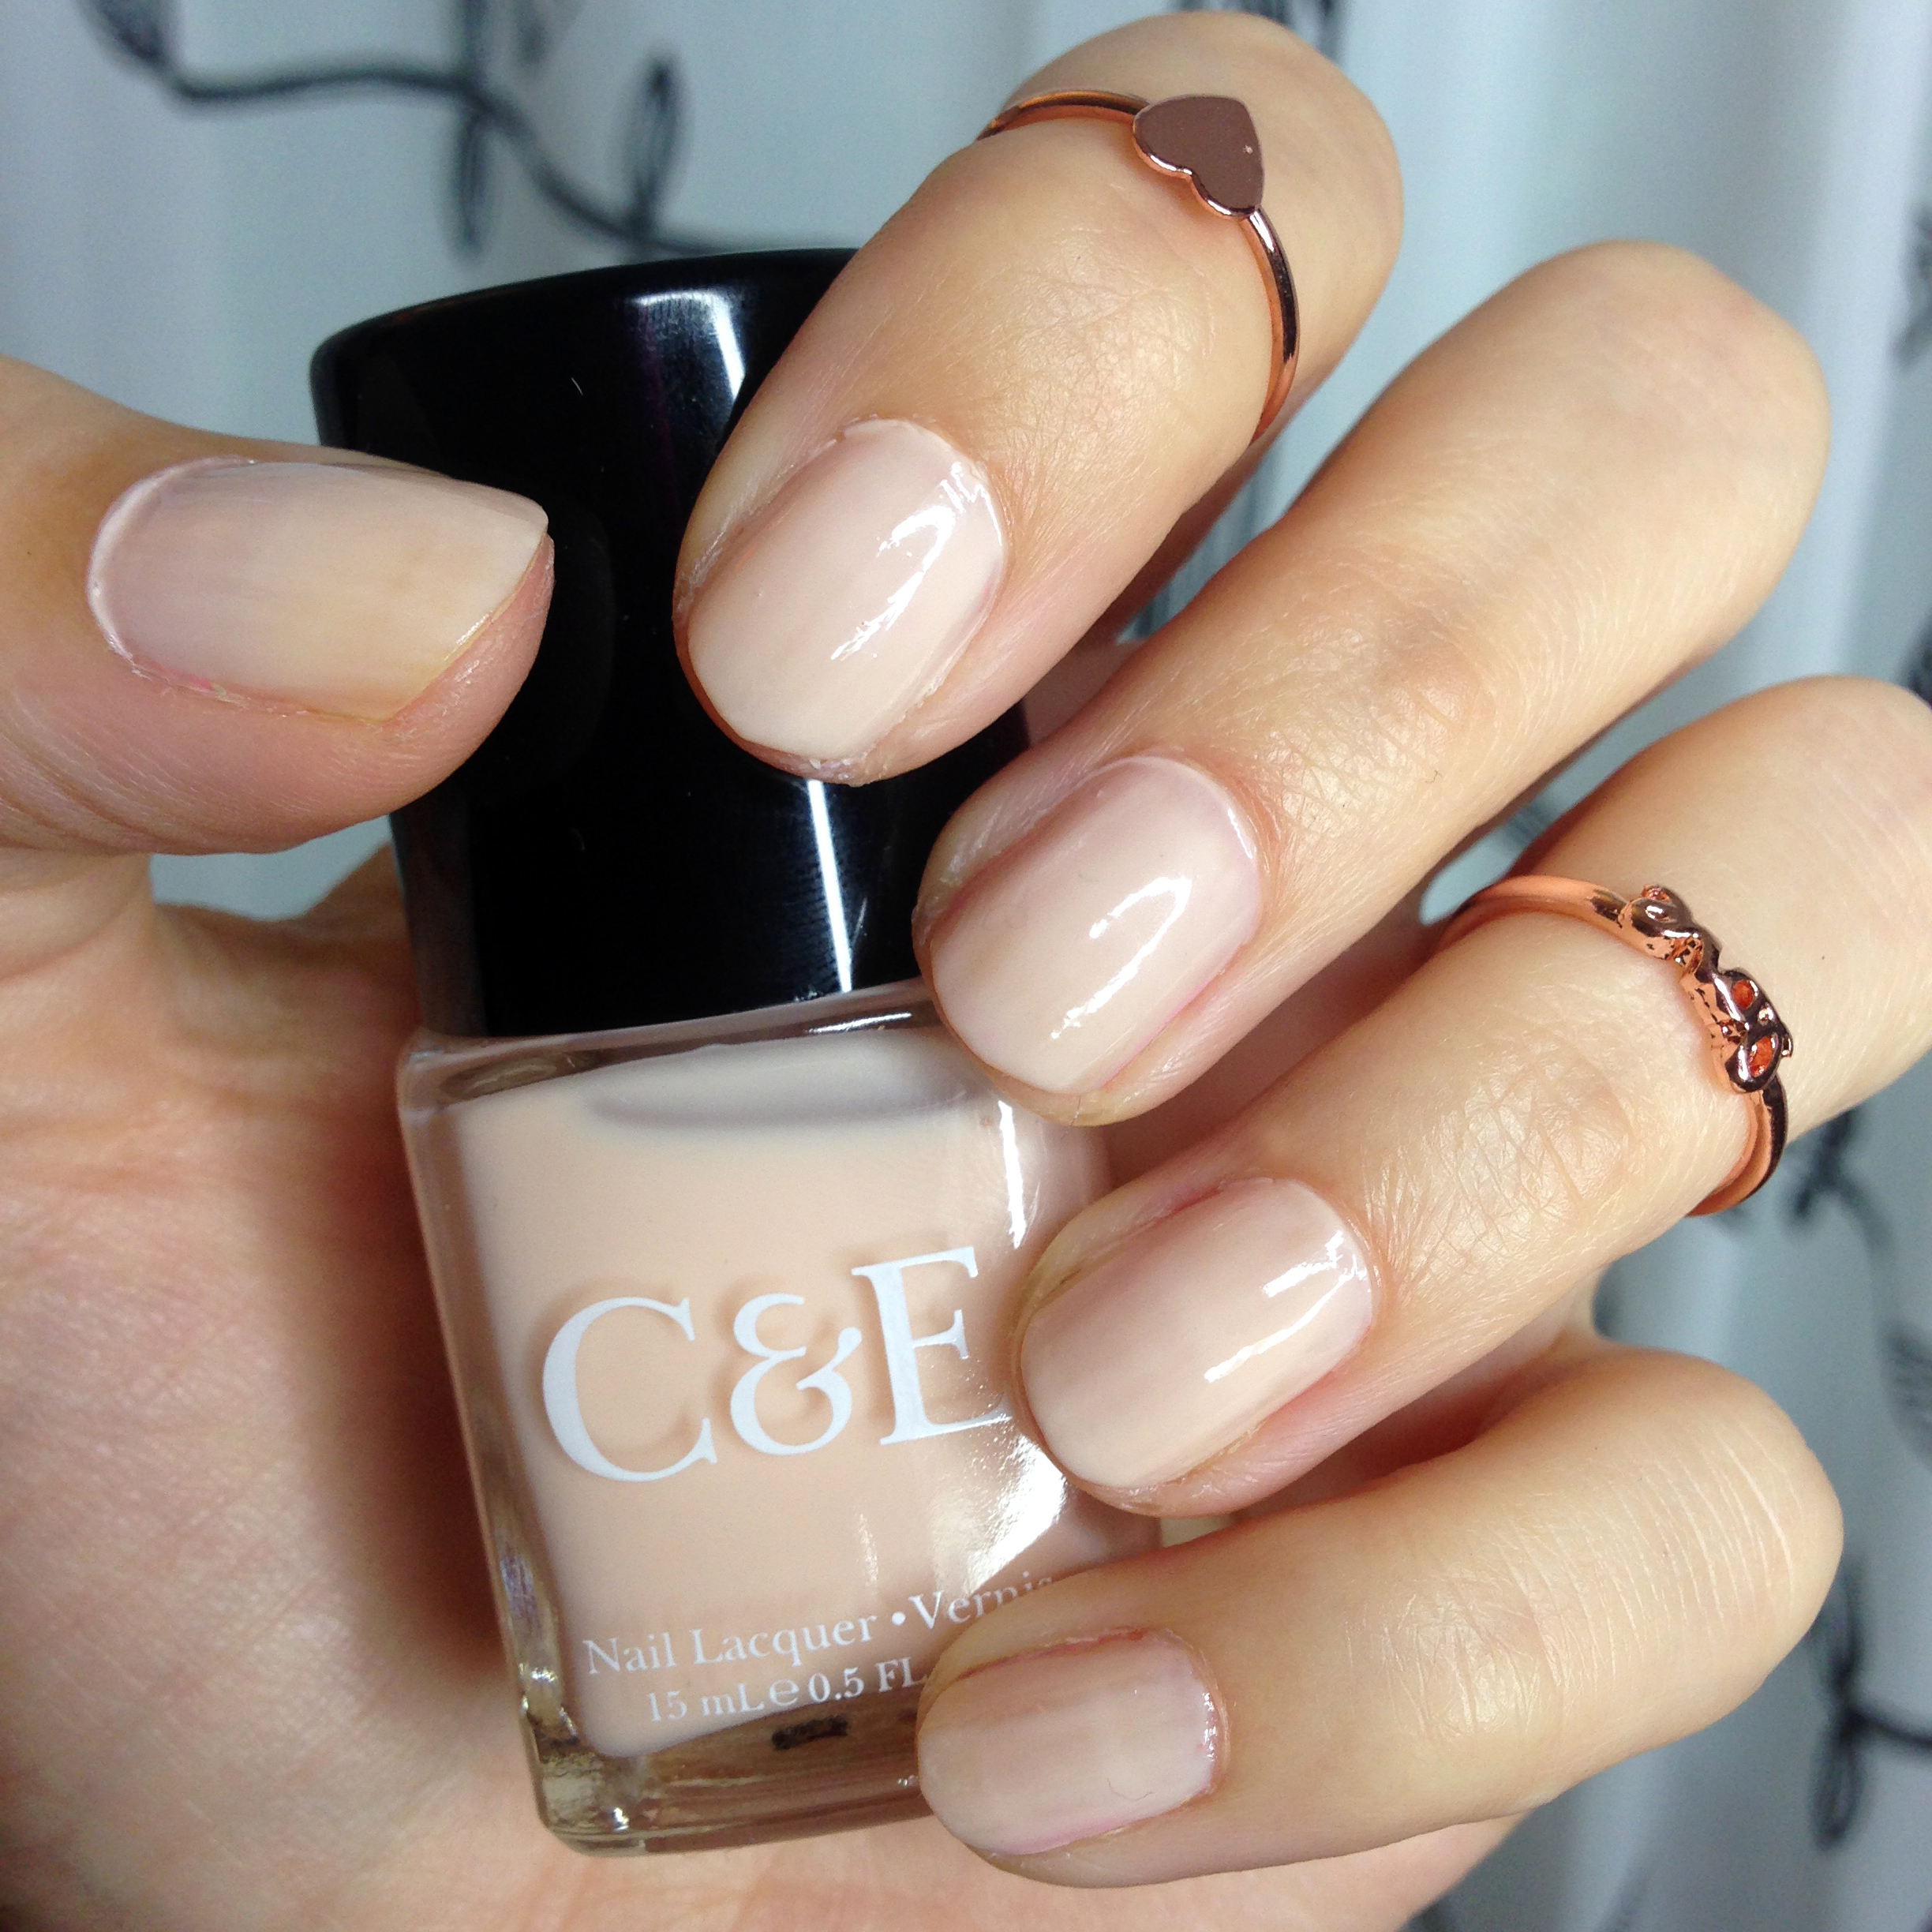 C&E nail polish